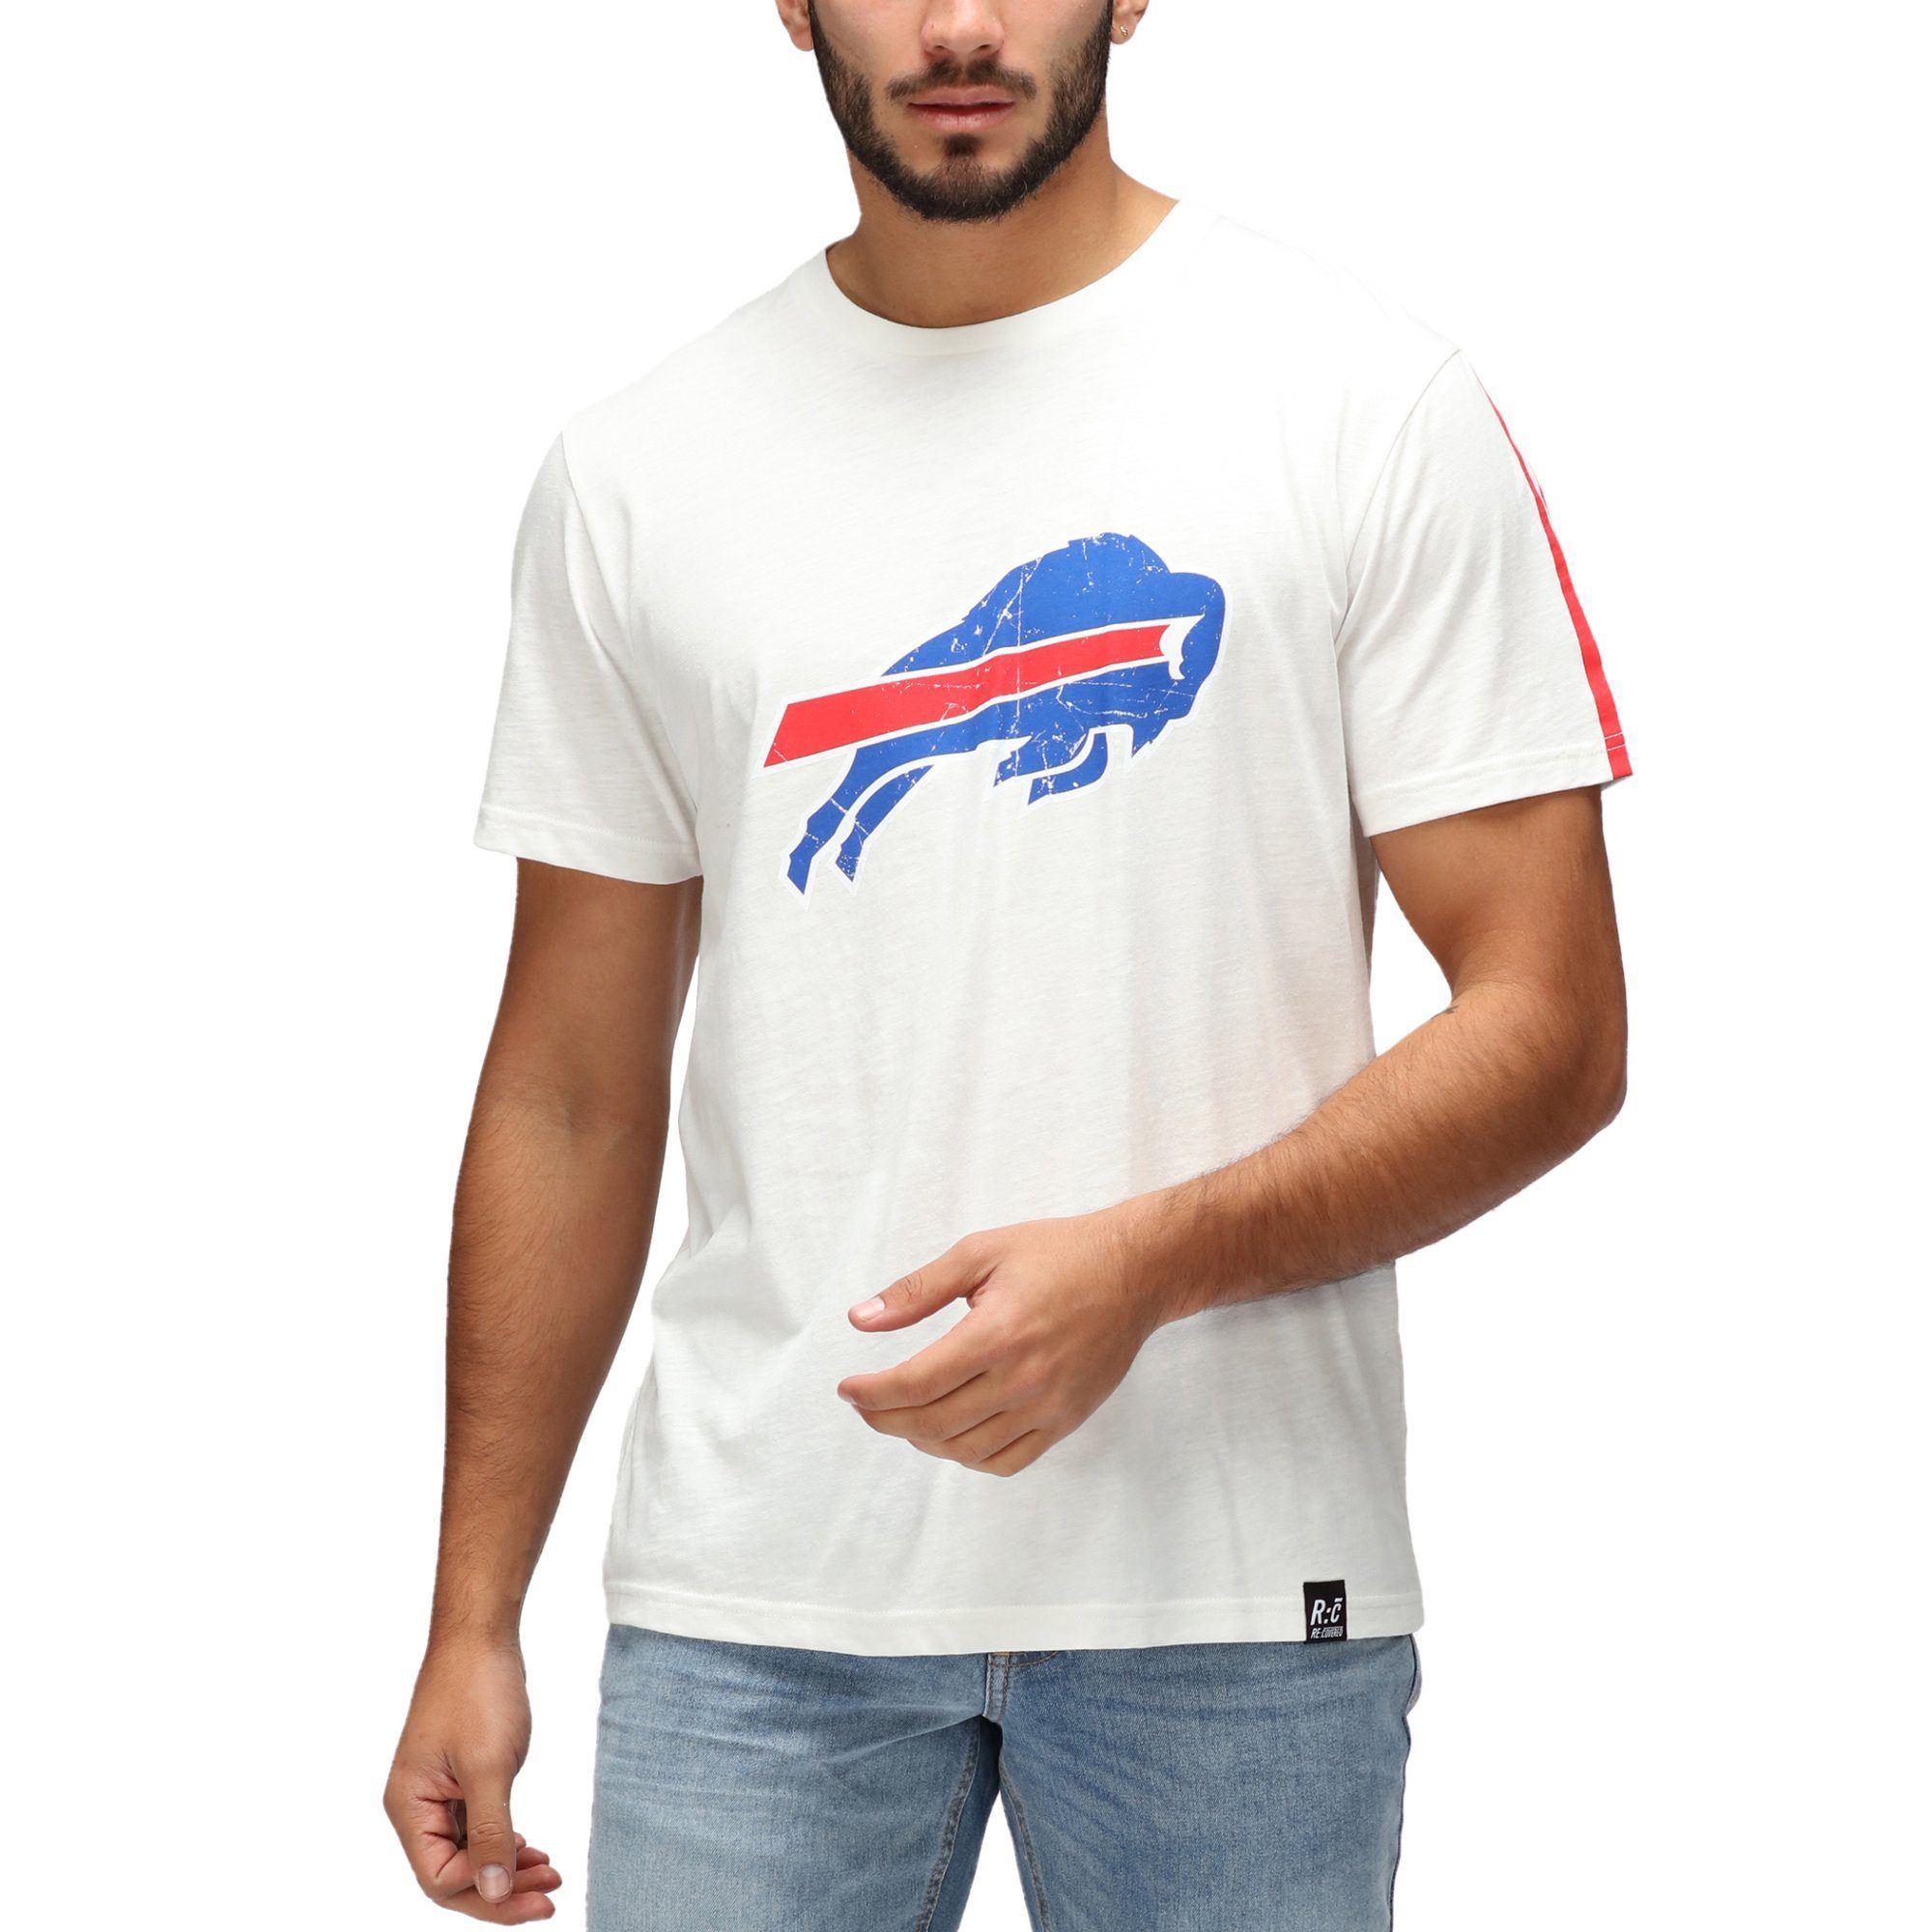 Recovered Print-Shirt Re:Covered NFL Buffalo Bills ecru